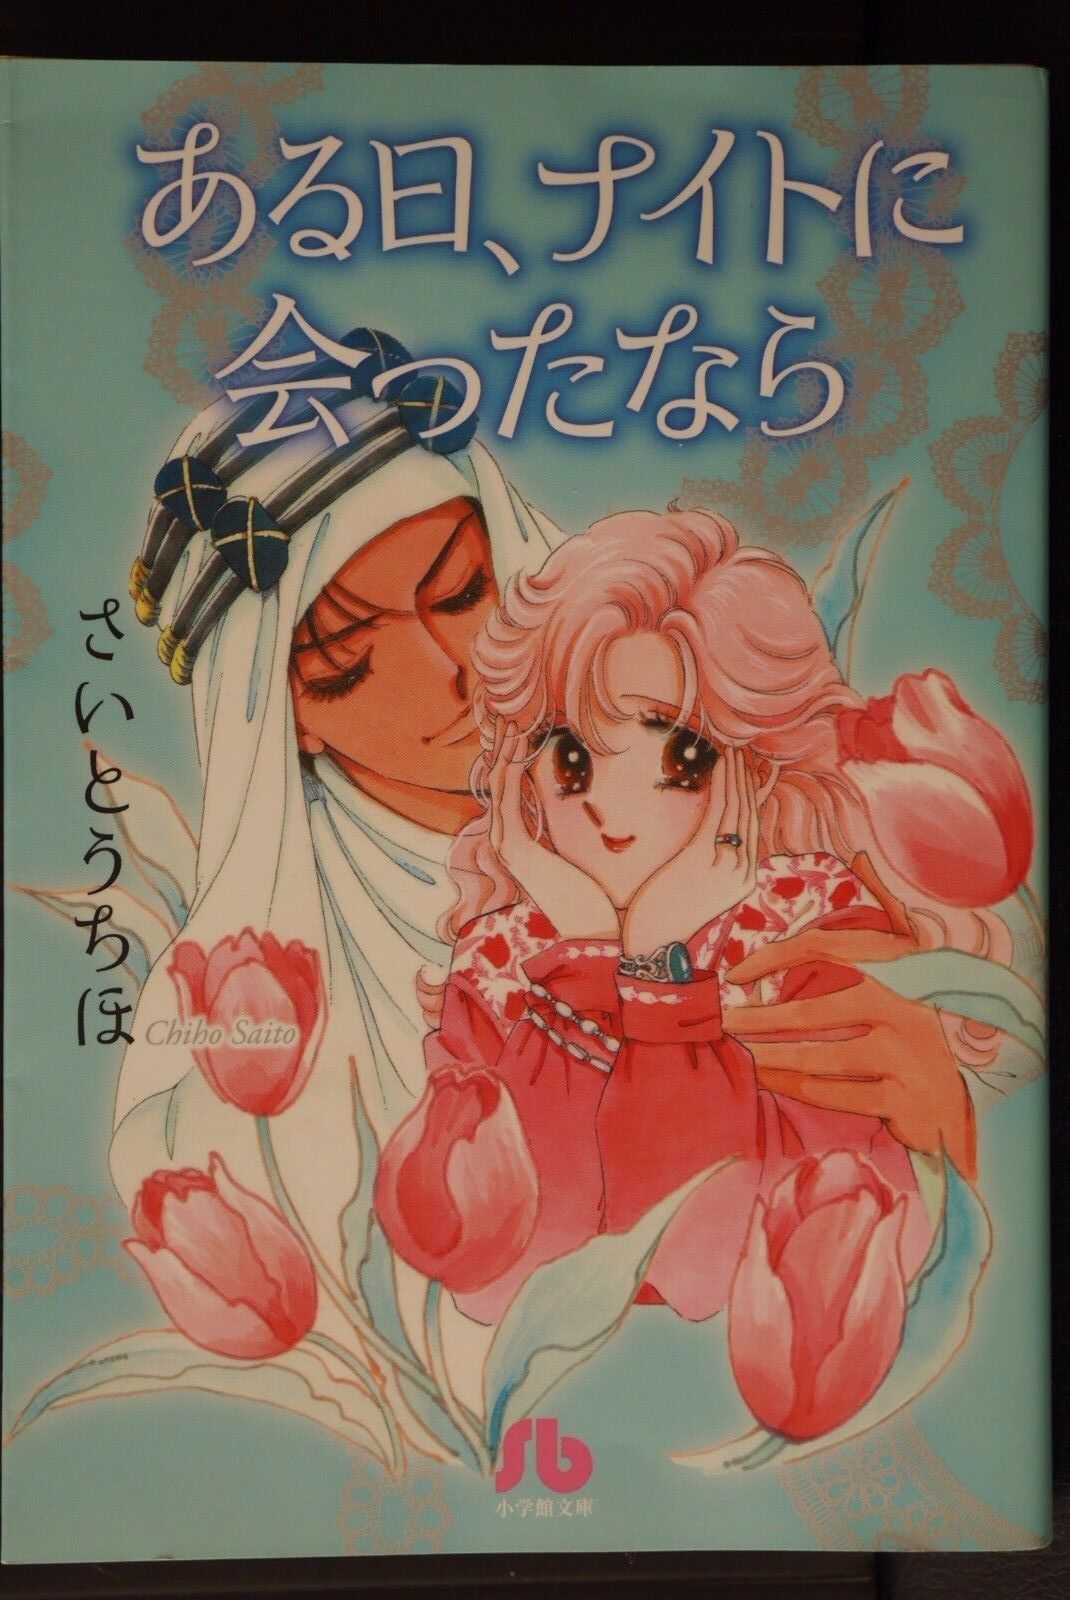 JAPAN Chiho Saito manga: One Day, While Meeting a Knight (Bunko version)